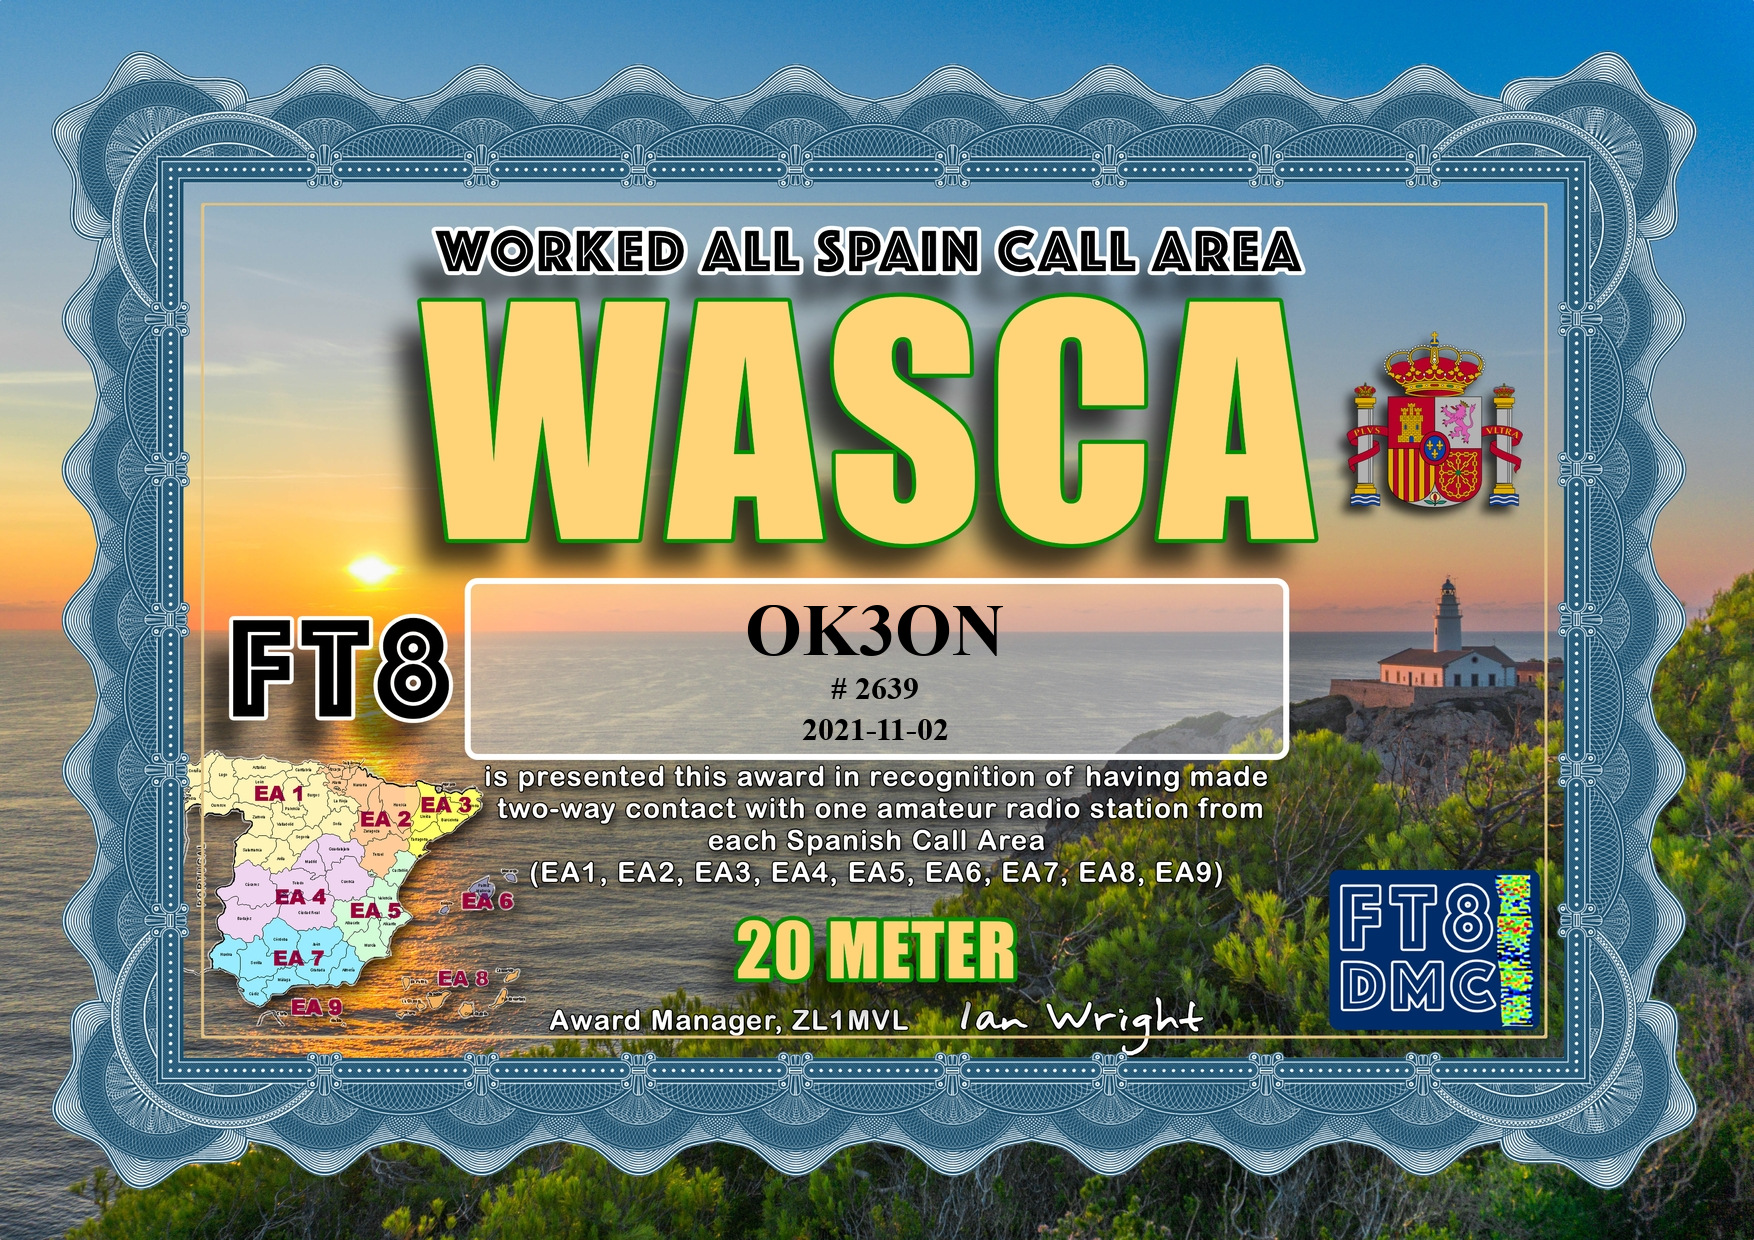 awards/OK3ON-WASCA-20M_FT8DMC.jpg